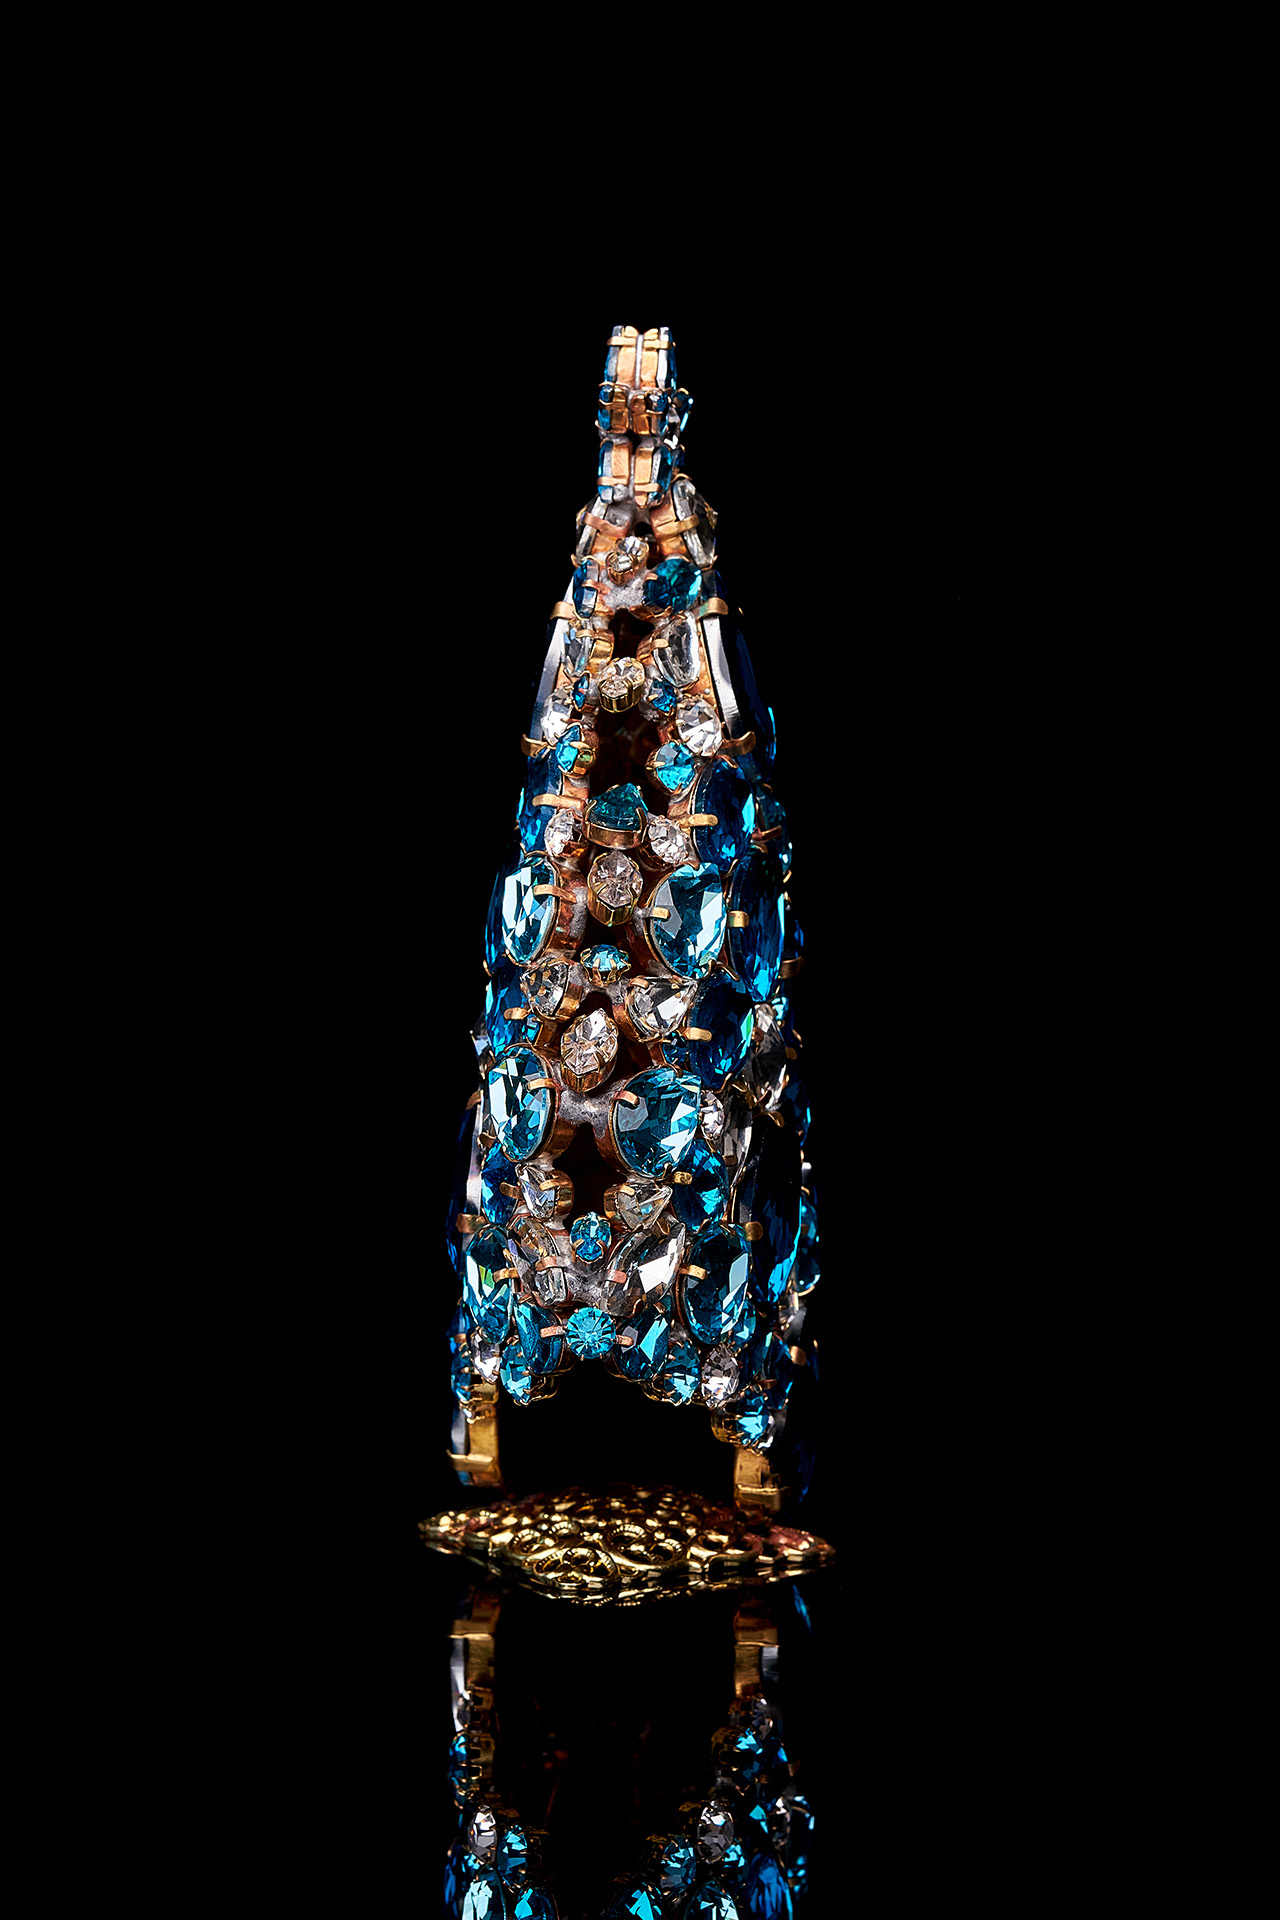 Czech handmade magical 3D Christmas tree in blue rhinestones